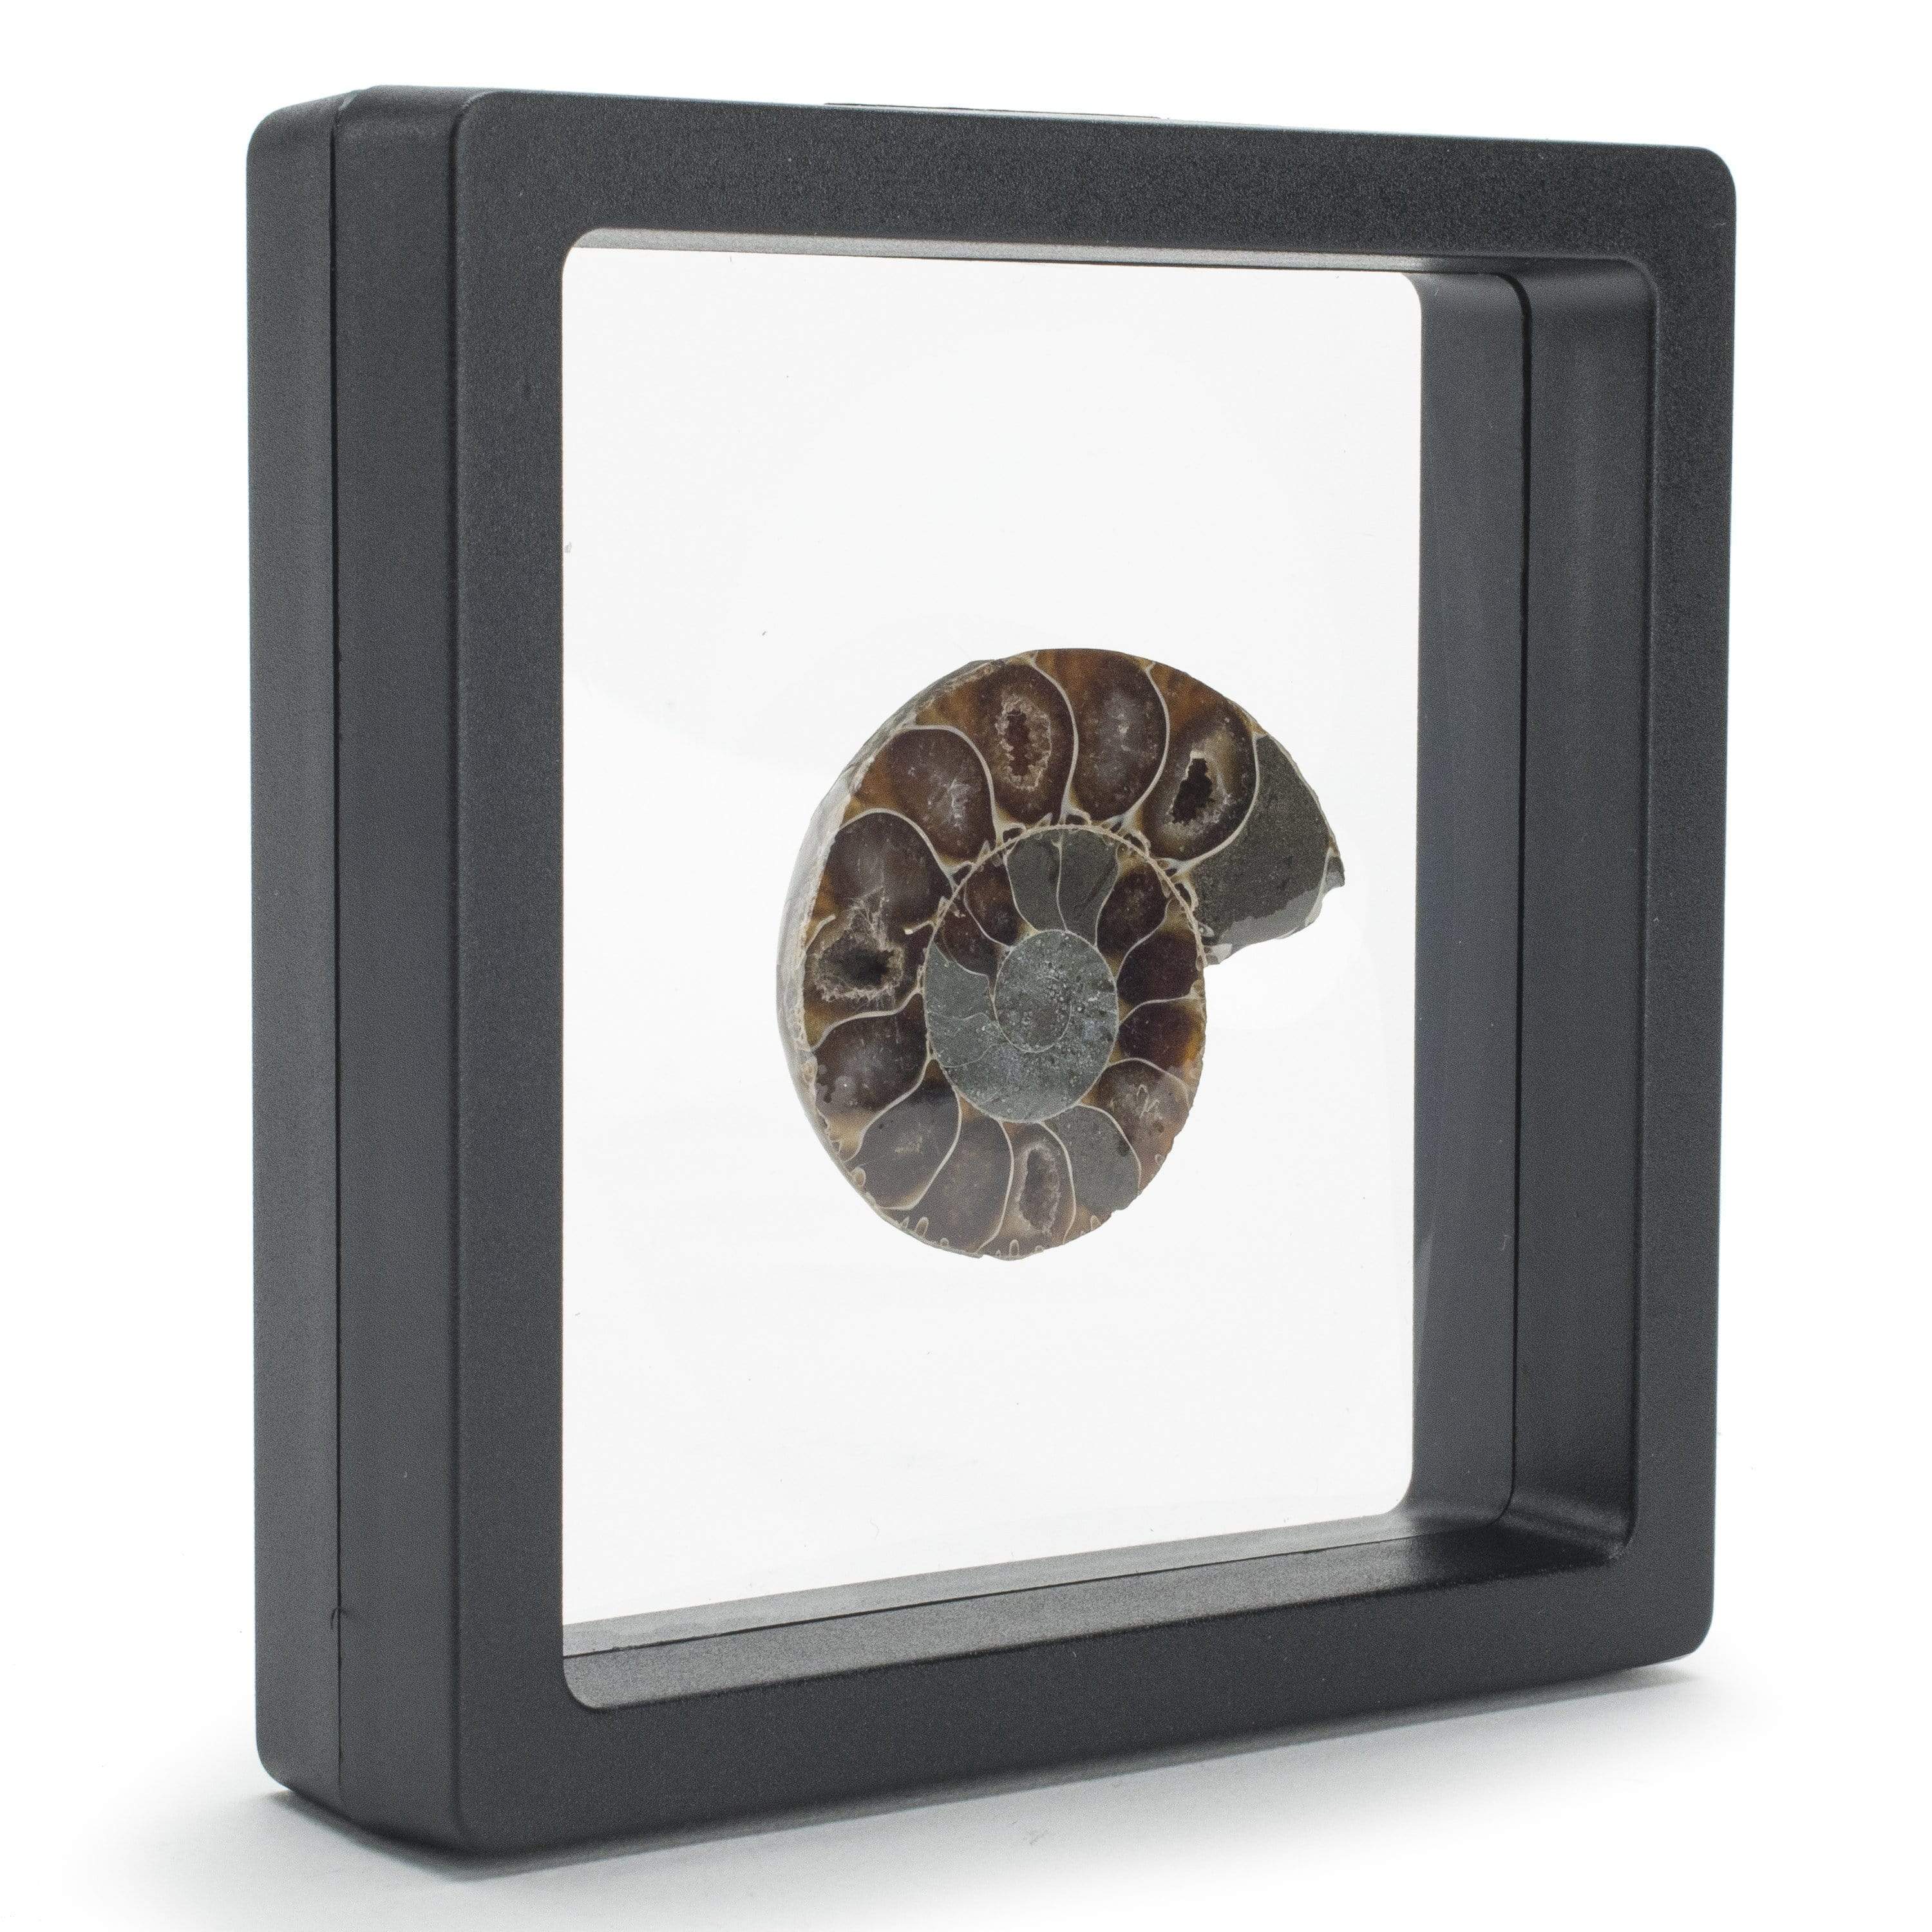 Kalifano Jewelry Displays Black FIlm Case Display - 9 cm x 9 cm DISPLAY-BFC